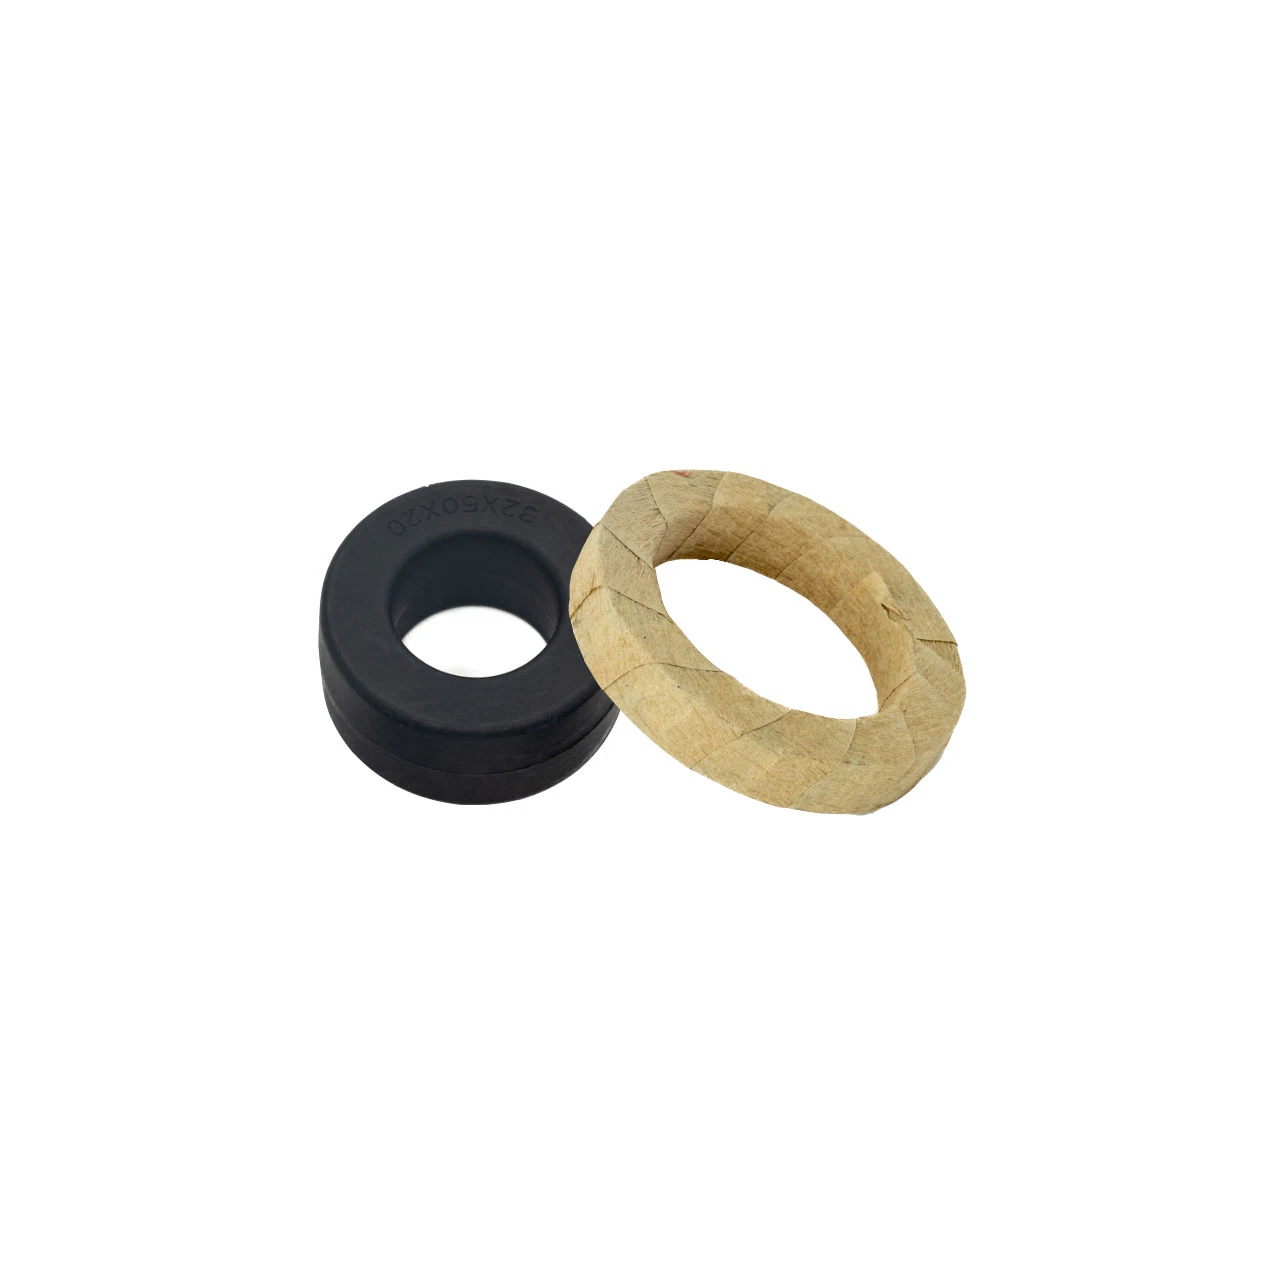 NdFeB Magnet Nanocrystalline Core T12*6*4 Ferrite Soft Magnetic Ring Core